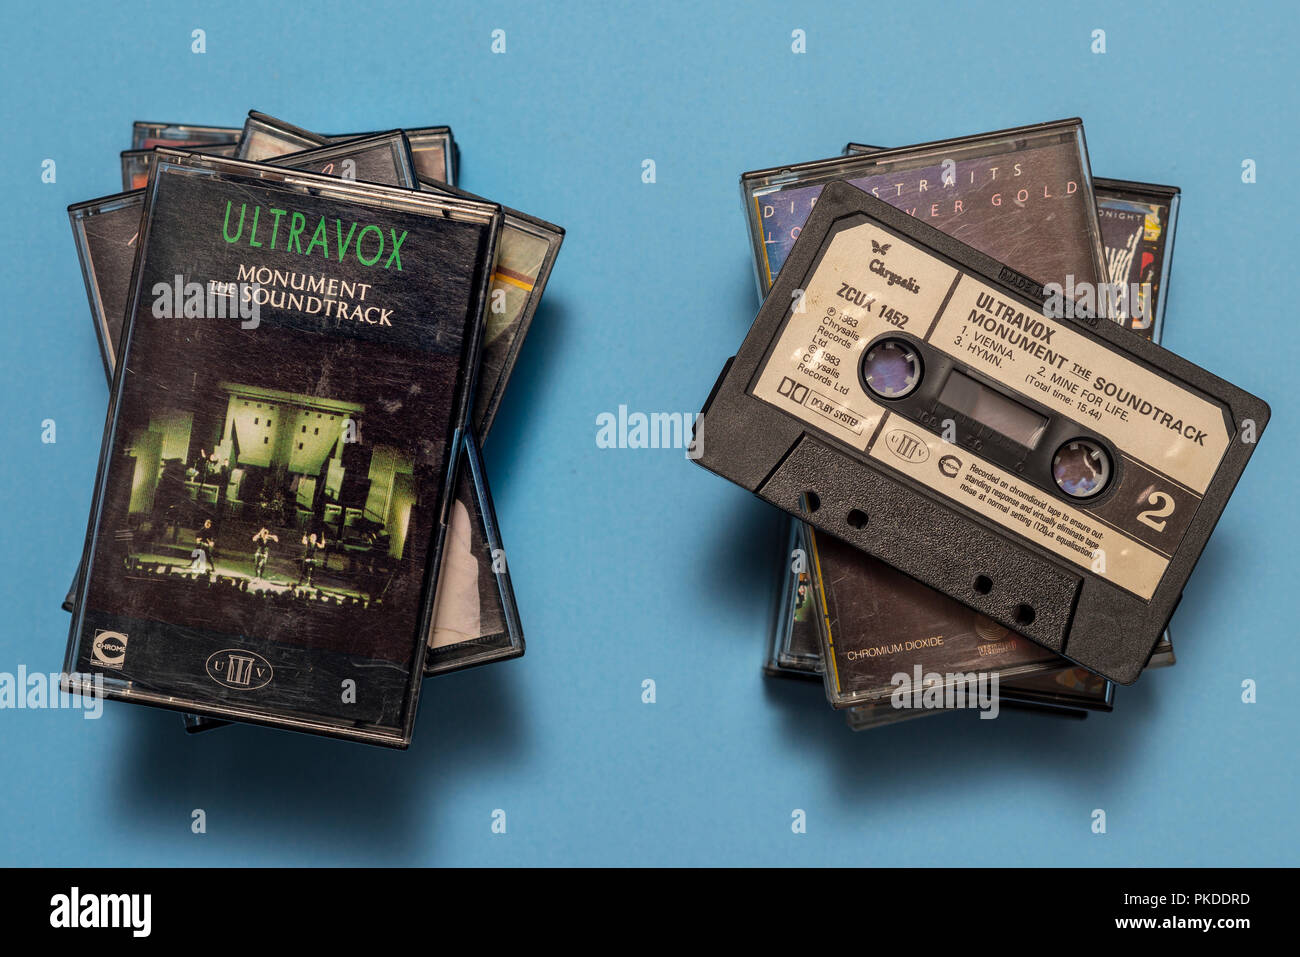 compact audio cassette of Ultravox, Monument soundtrack album with art work. Stock Photo